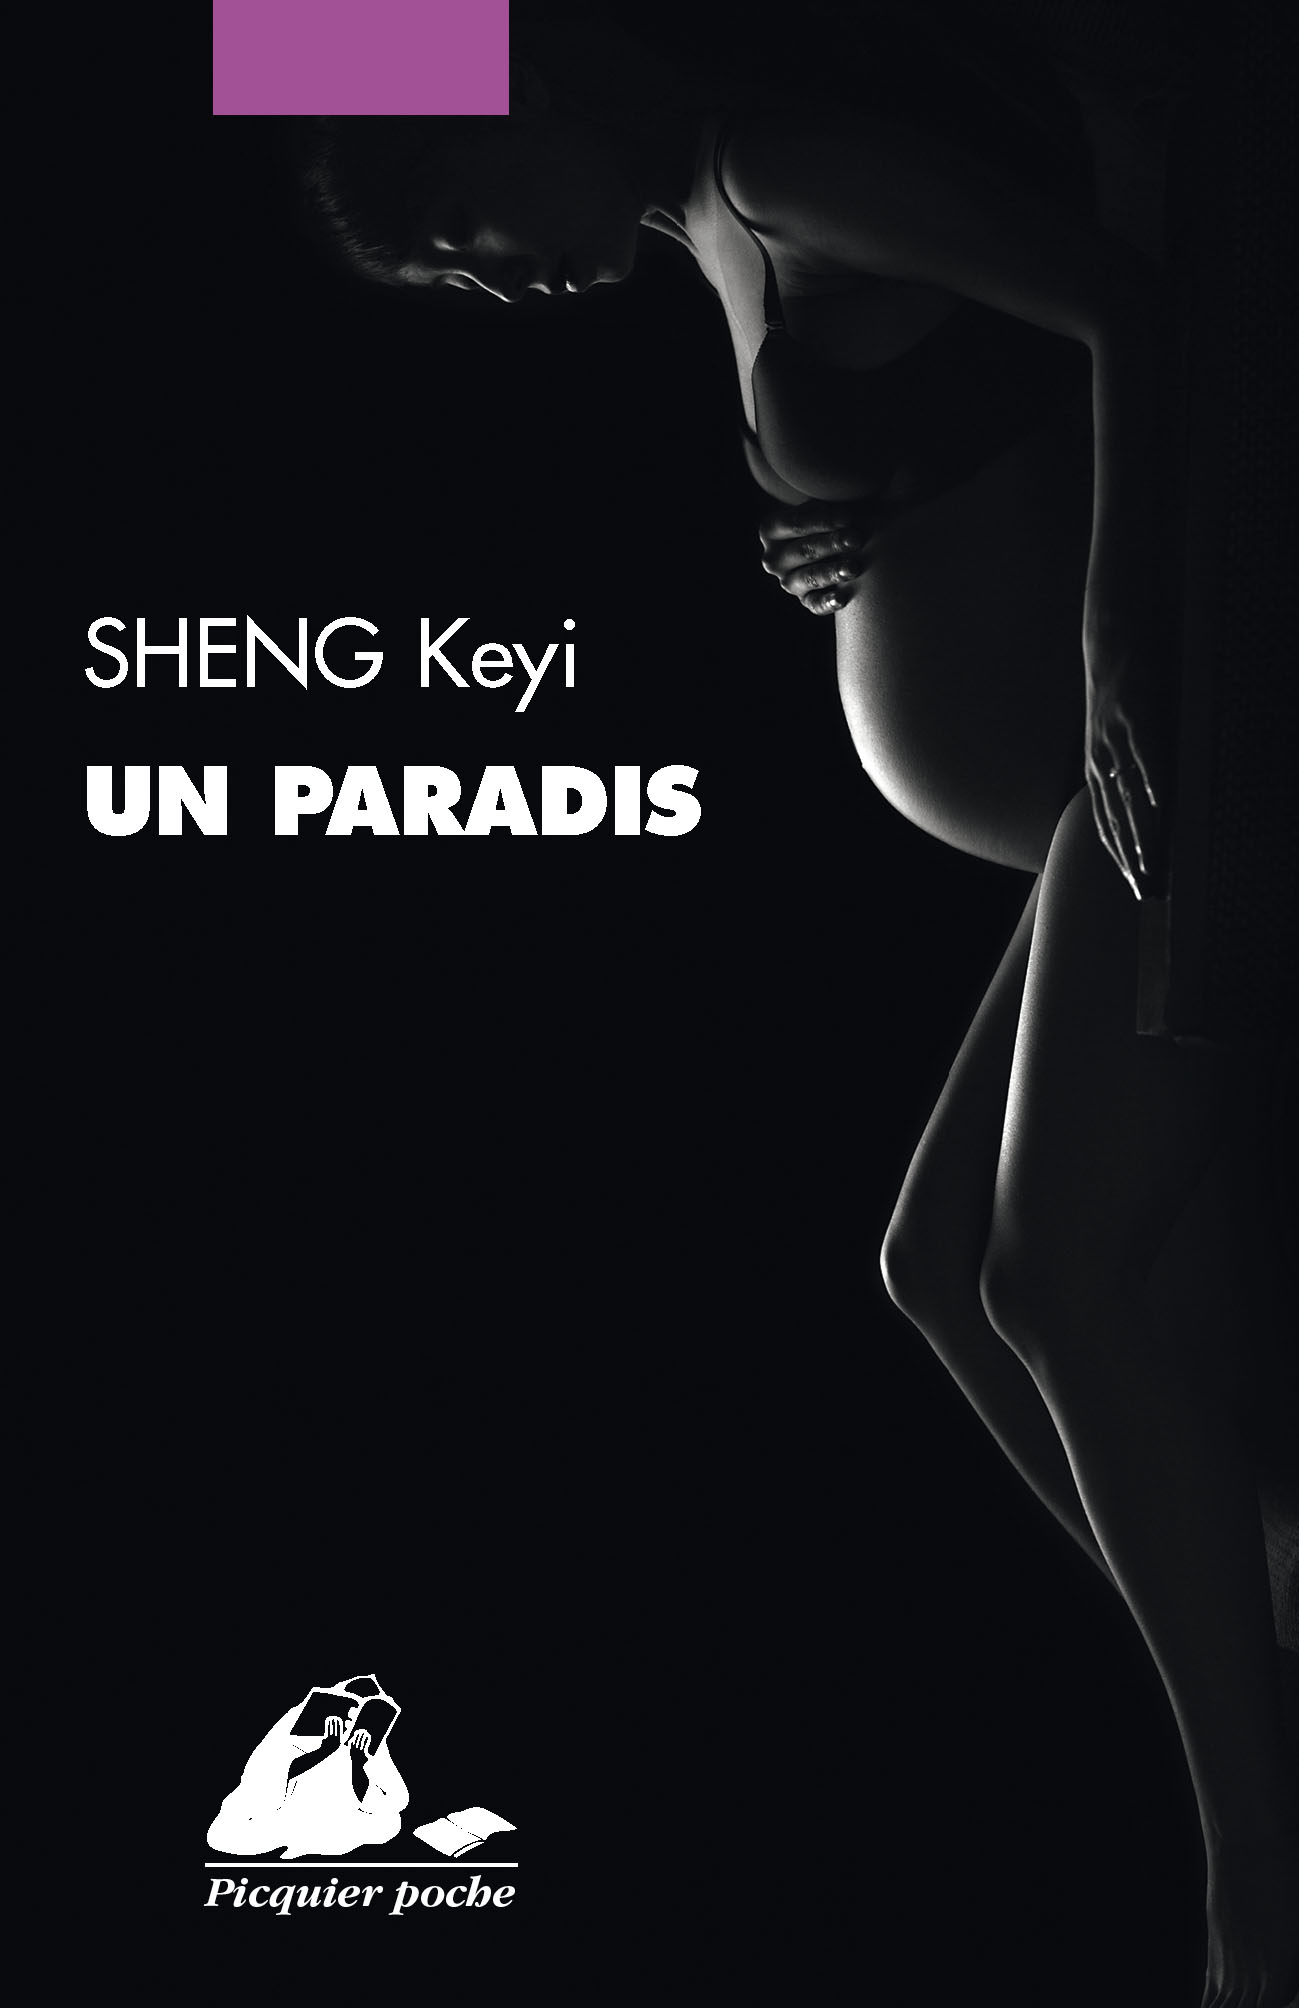 Un paradis de Sheng Keyi sort en poche.